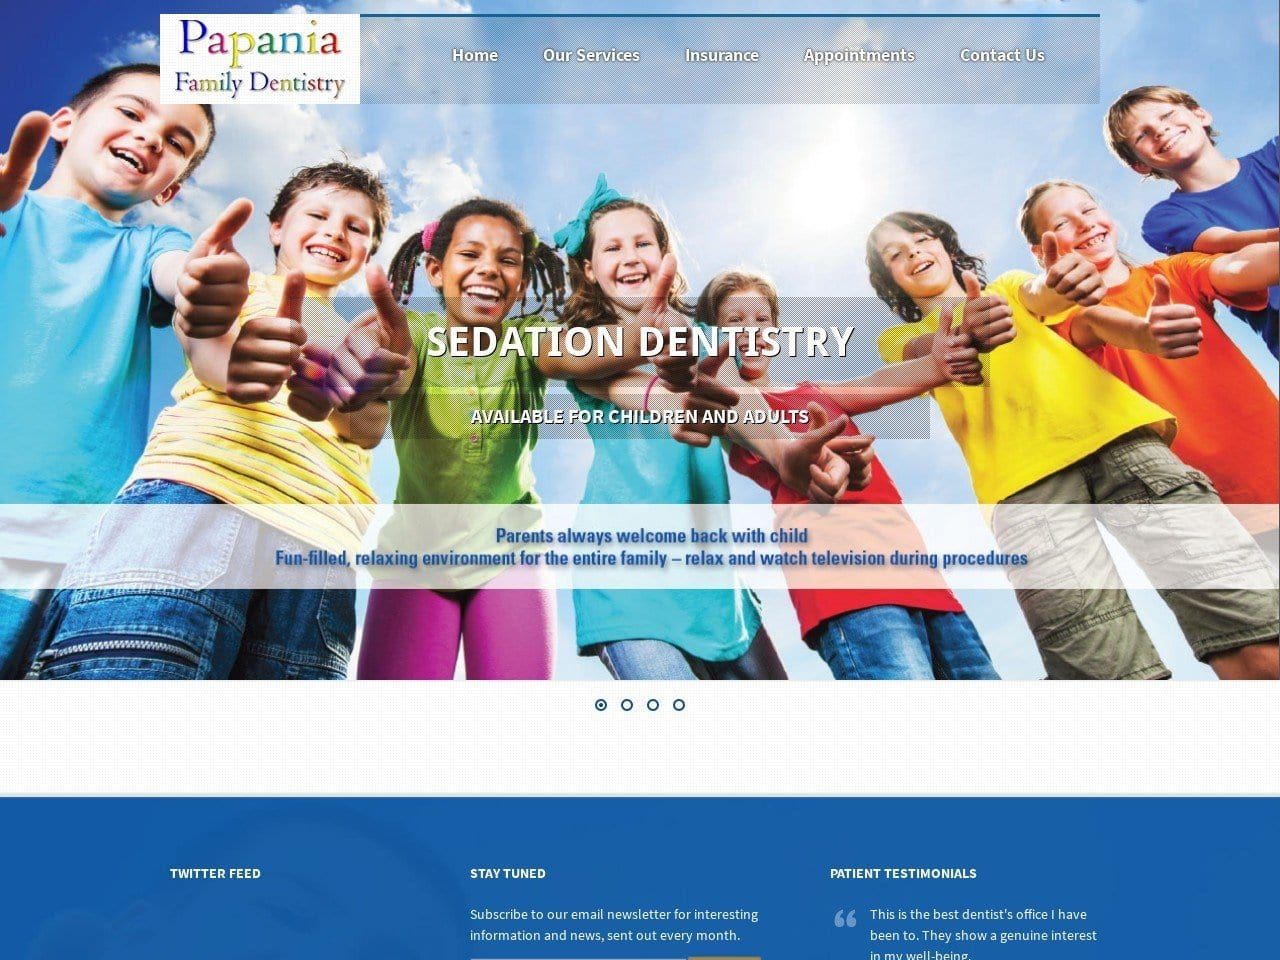 Papania Family Dentistry Website Screenshot from papdental.com